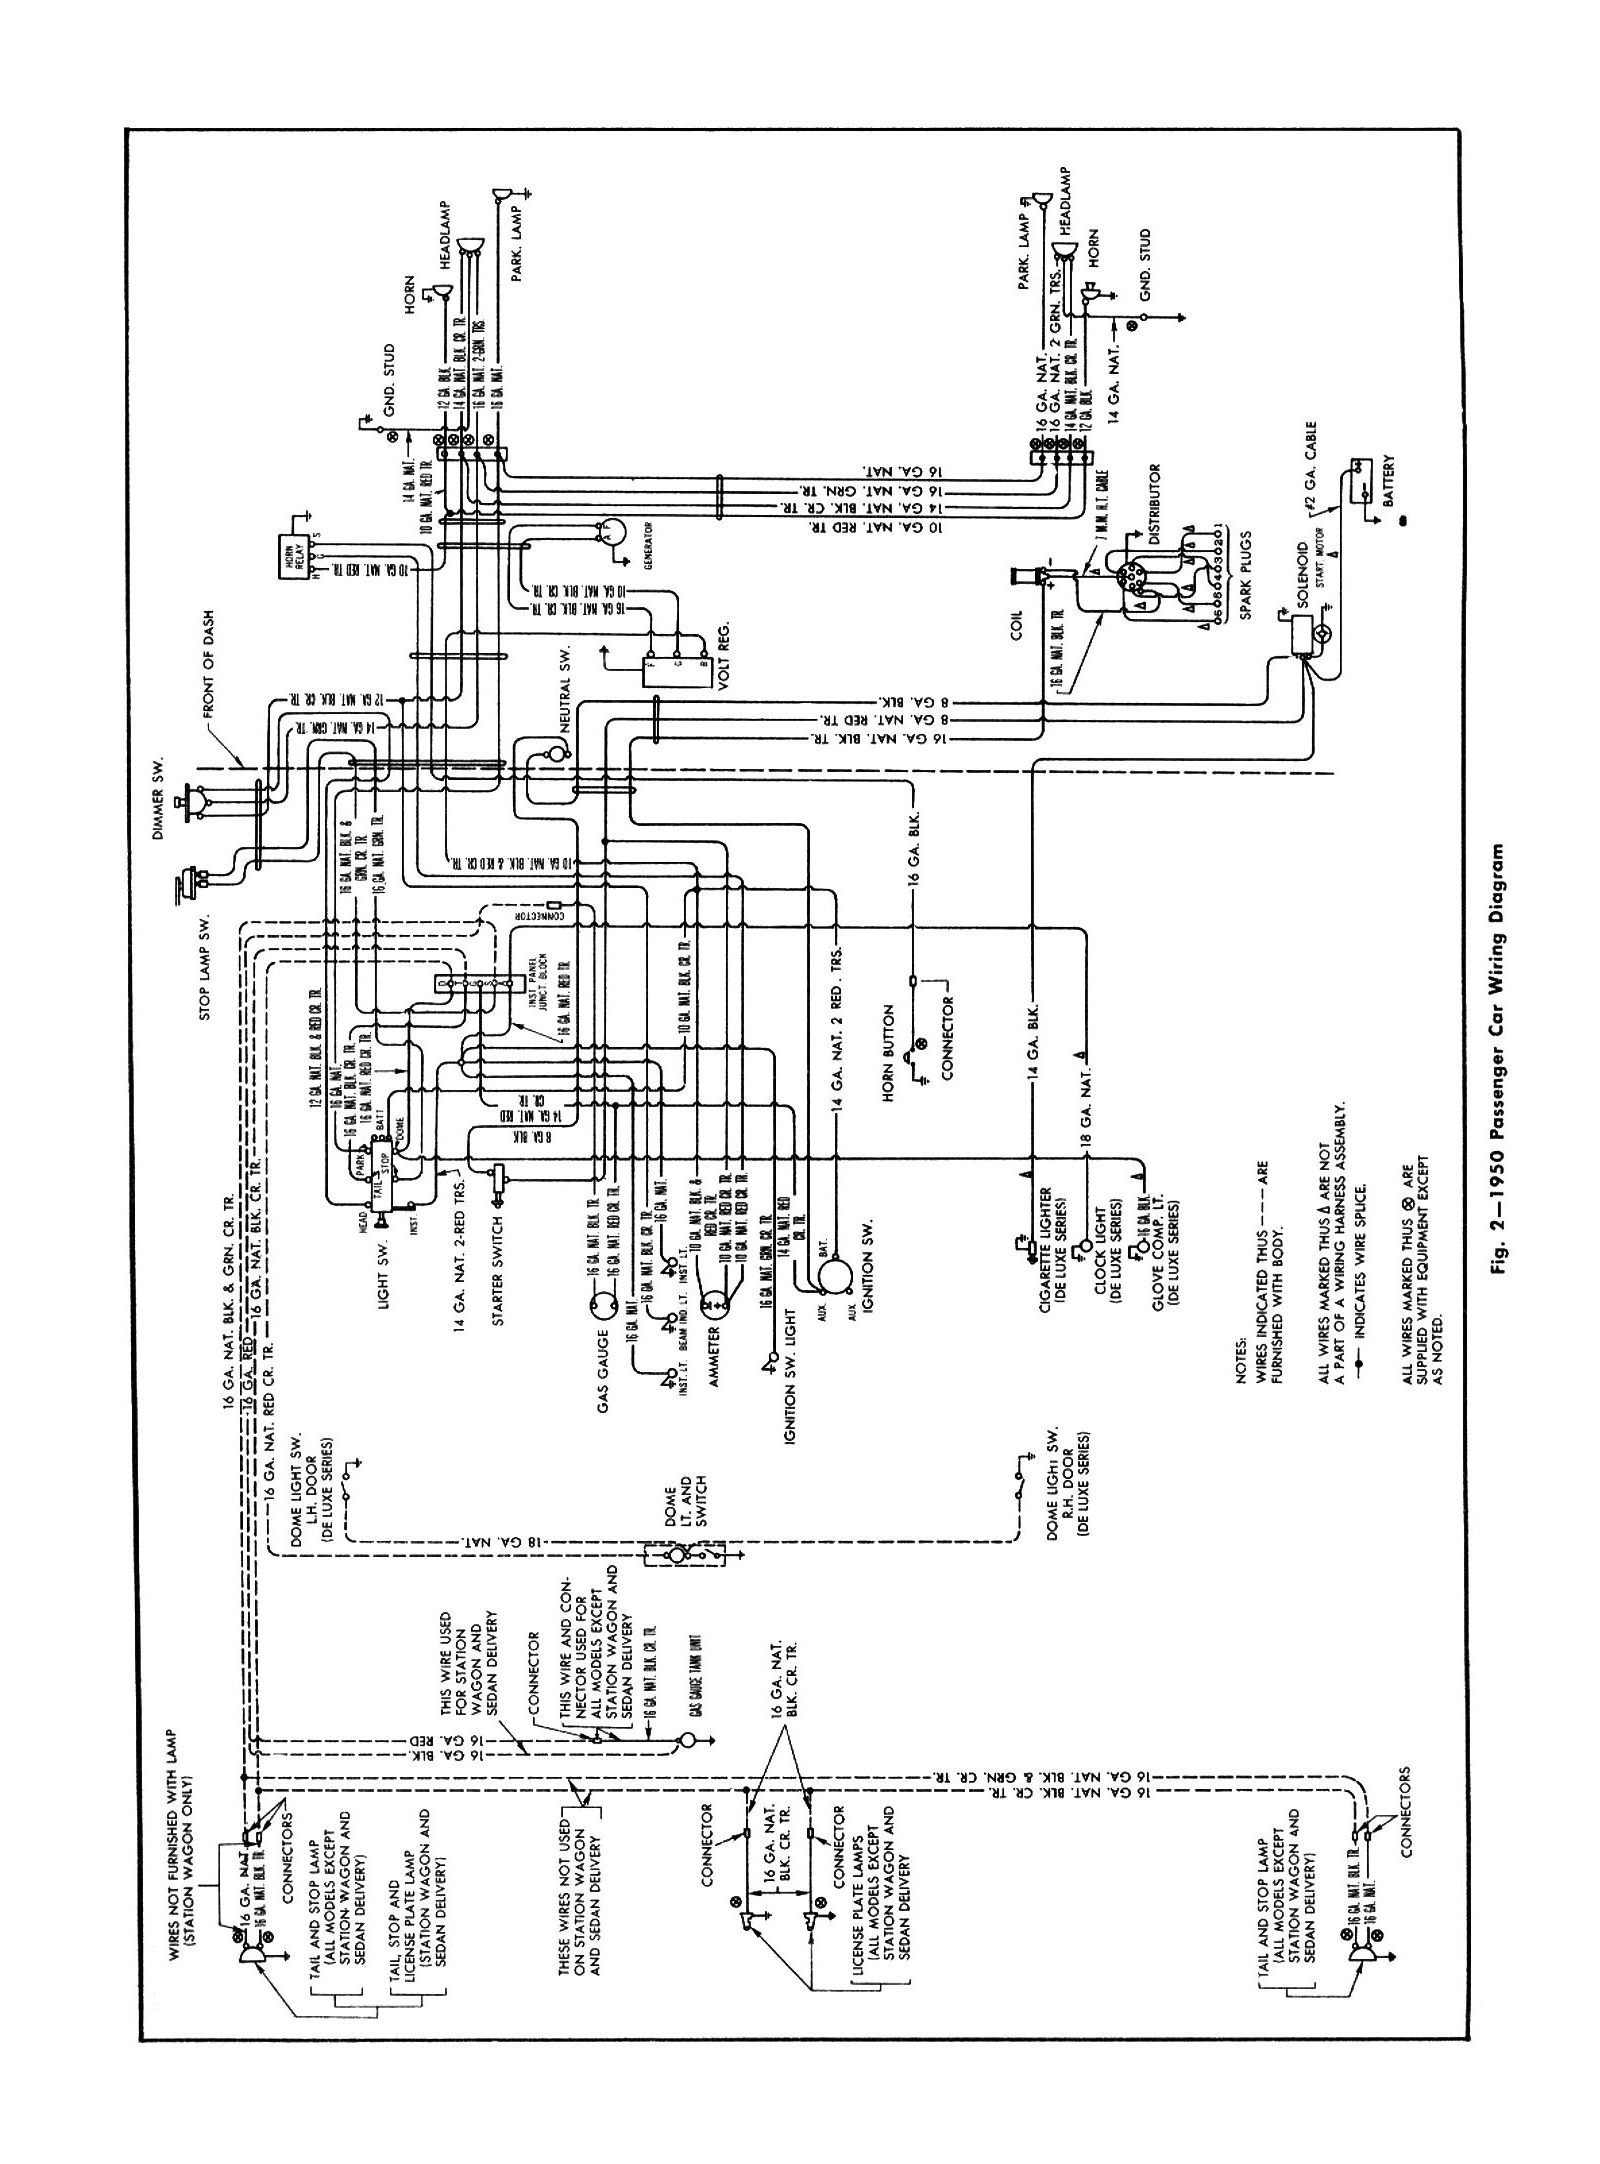 216 Chevy Engine Diagram | My Wiring DIagram